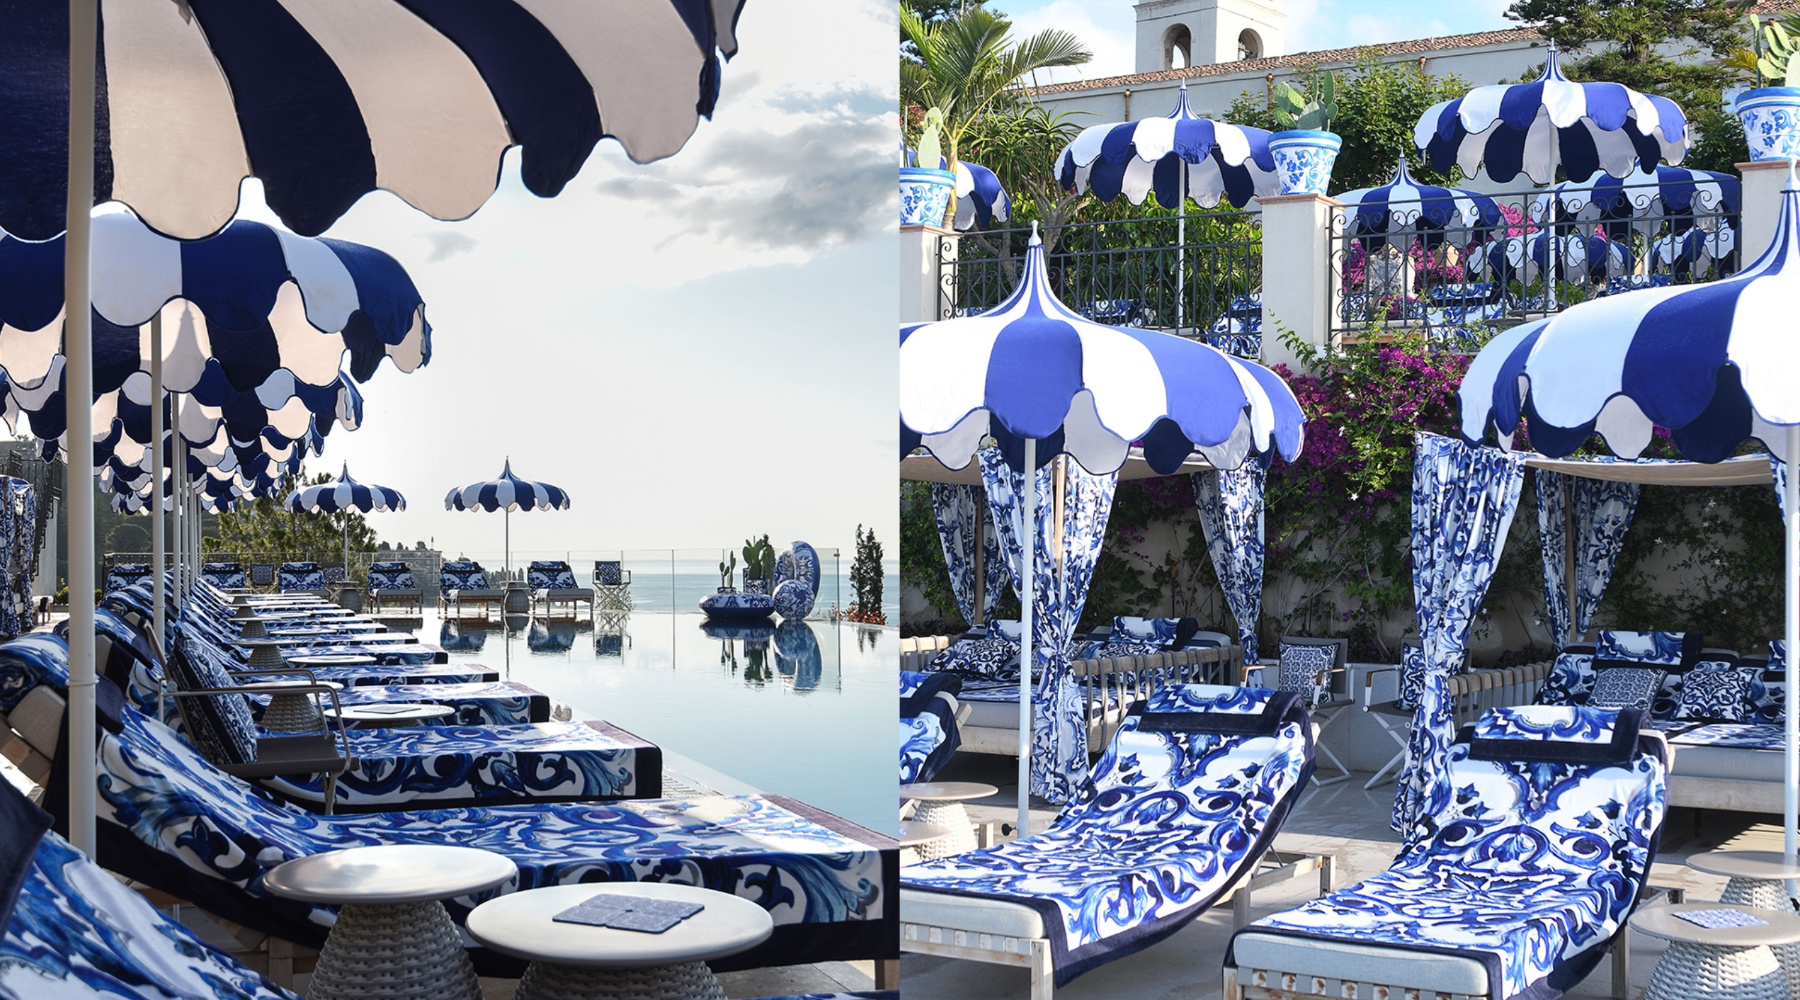 Pool-side hotela Four Seasons iz serije „White Lotus“ u novom Dolce&Gabbana ruhu